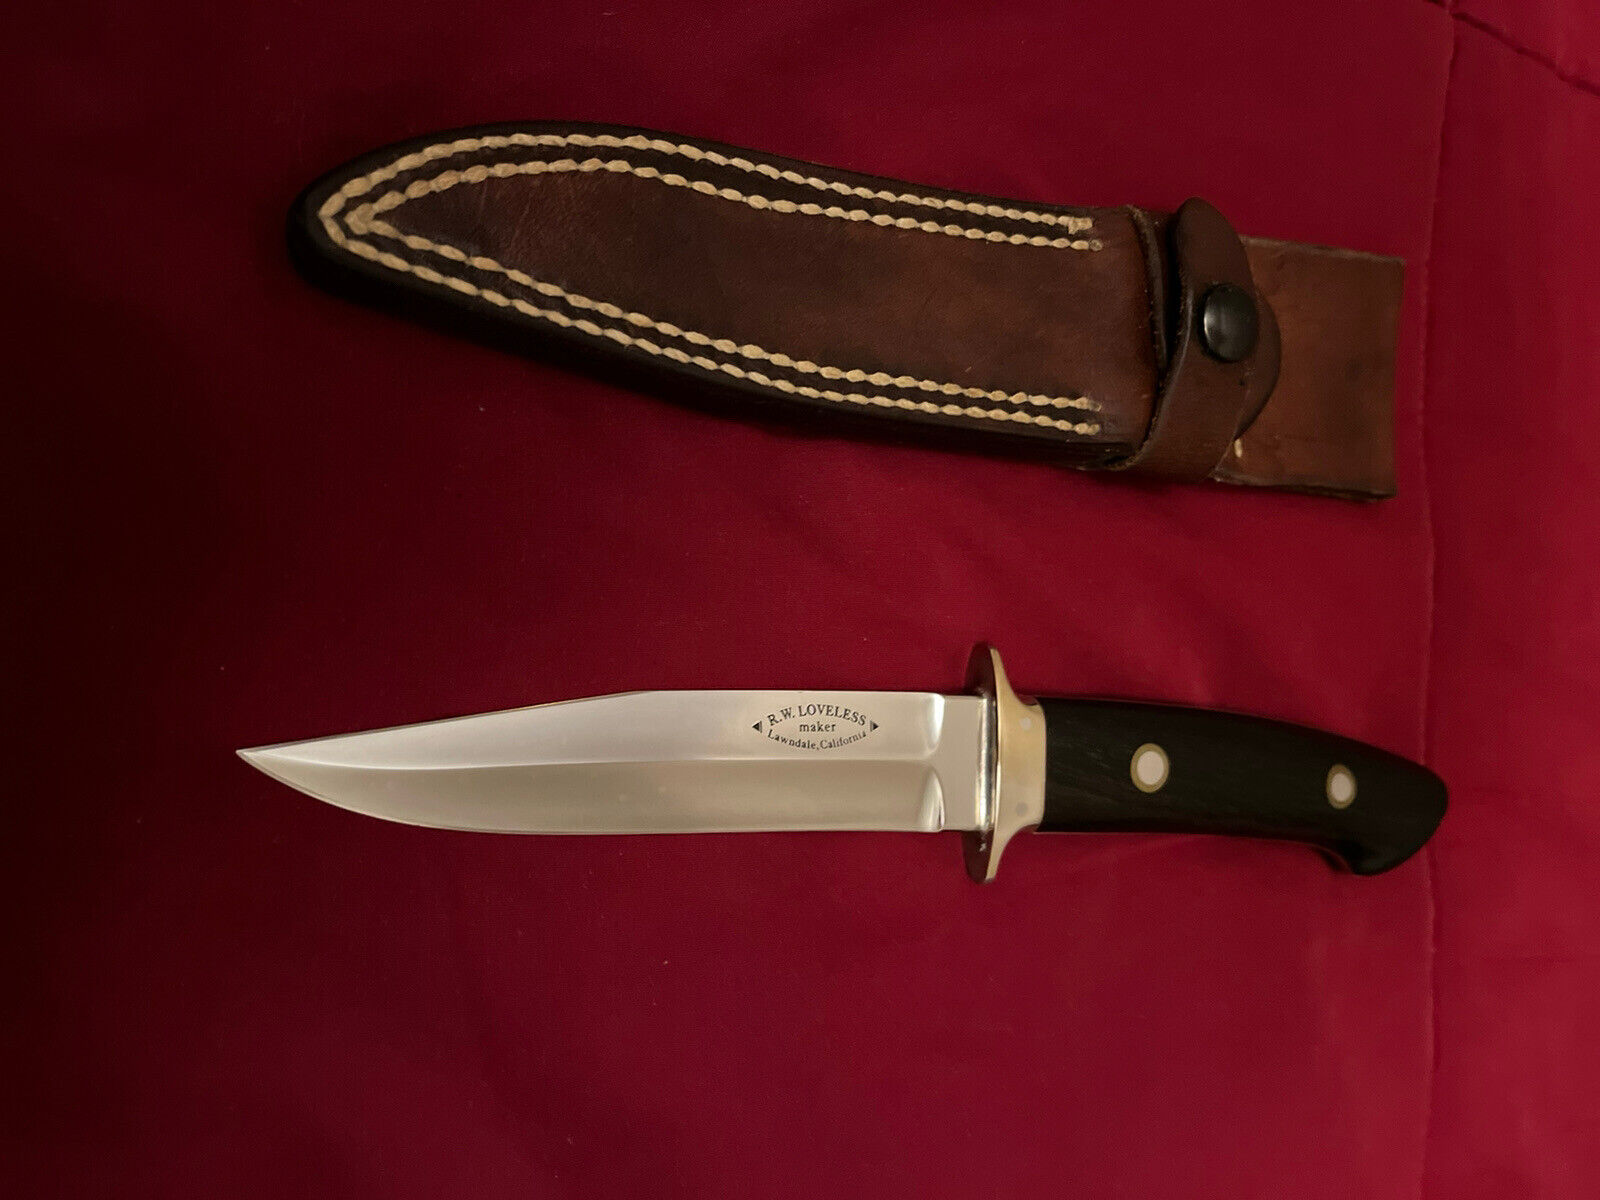 RW. Loveless Custom Maker Lawndale, California Boot Knife-Sheath-Rare